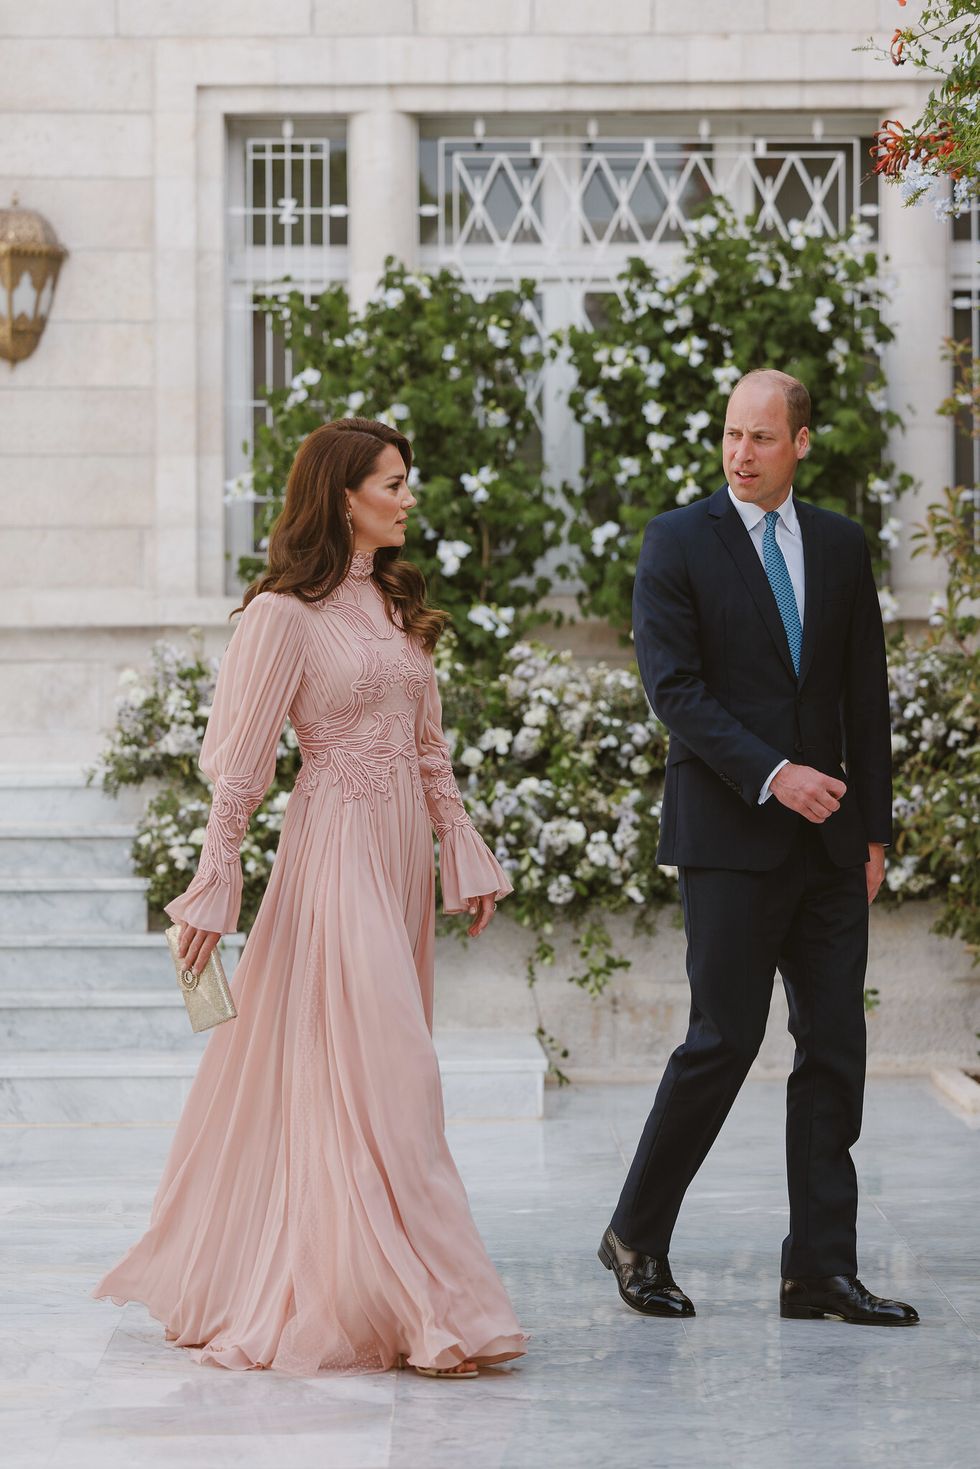 Jordan royal wedding - Figure 2